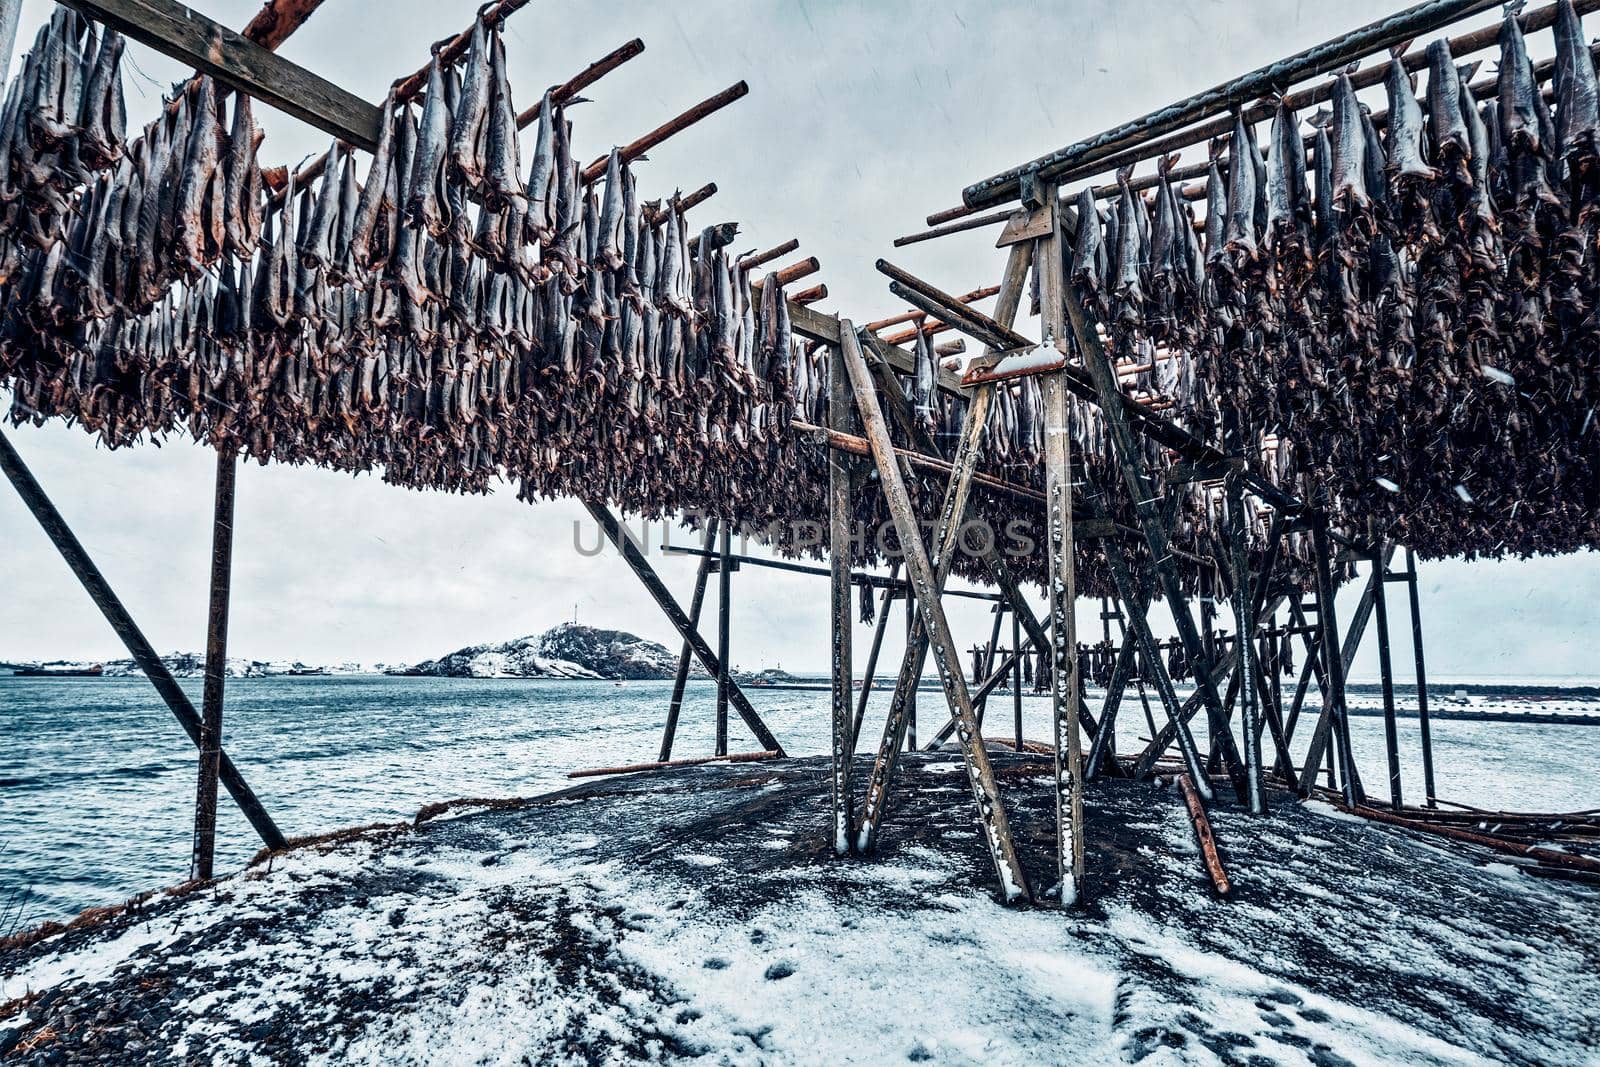 Drying flakes with stockfish cod fish in winter. Reine fishing village, Lofoten islands, Norway